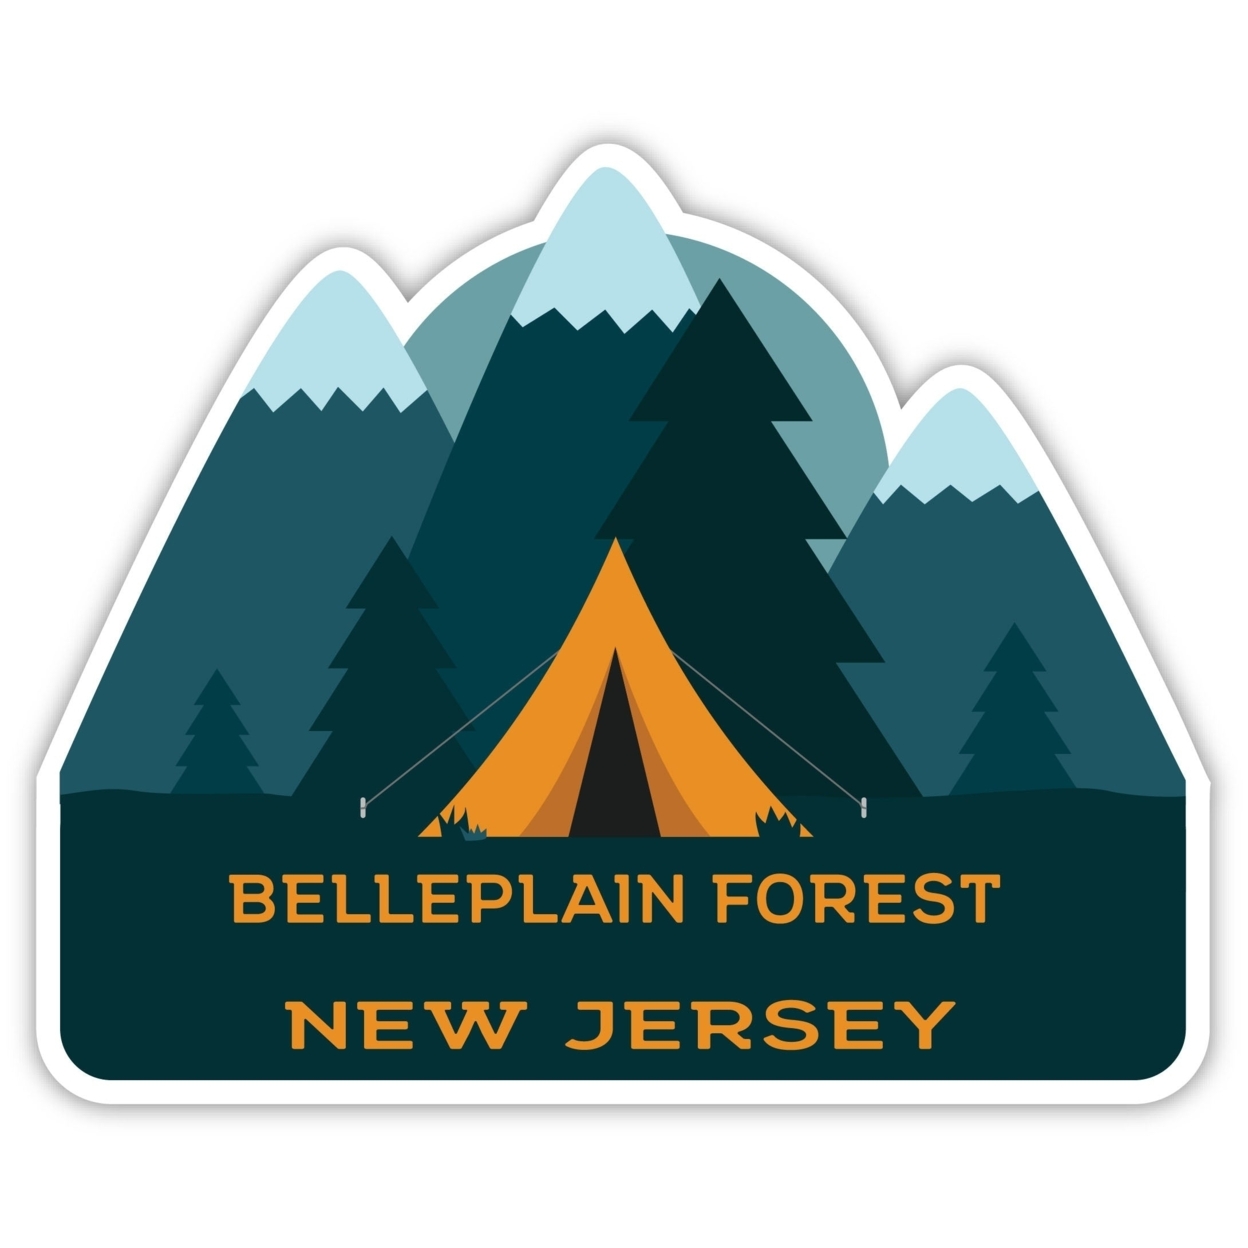 Belleplain Forest New Jersey Souvenir Decorative Stickers (Choose Theme And Size) - Single Unit, 6-Inch, Tent